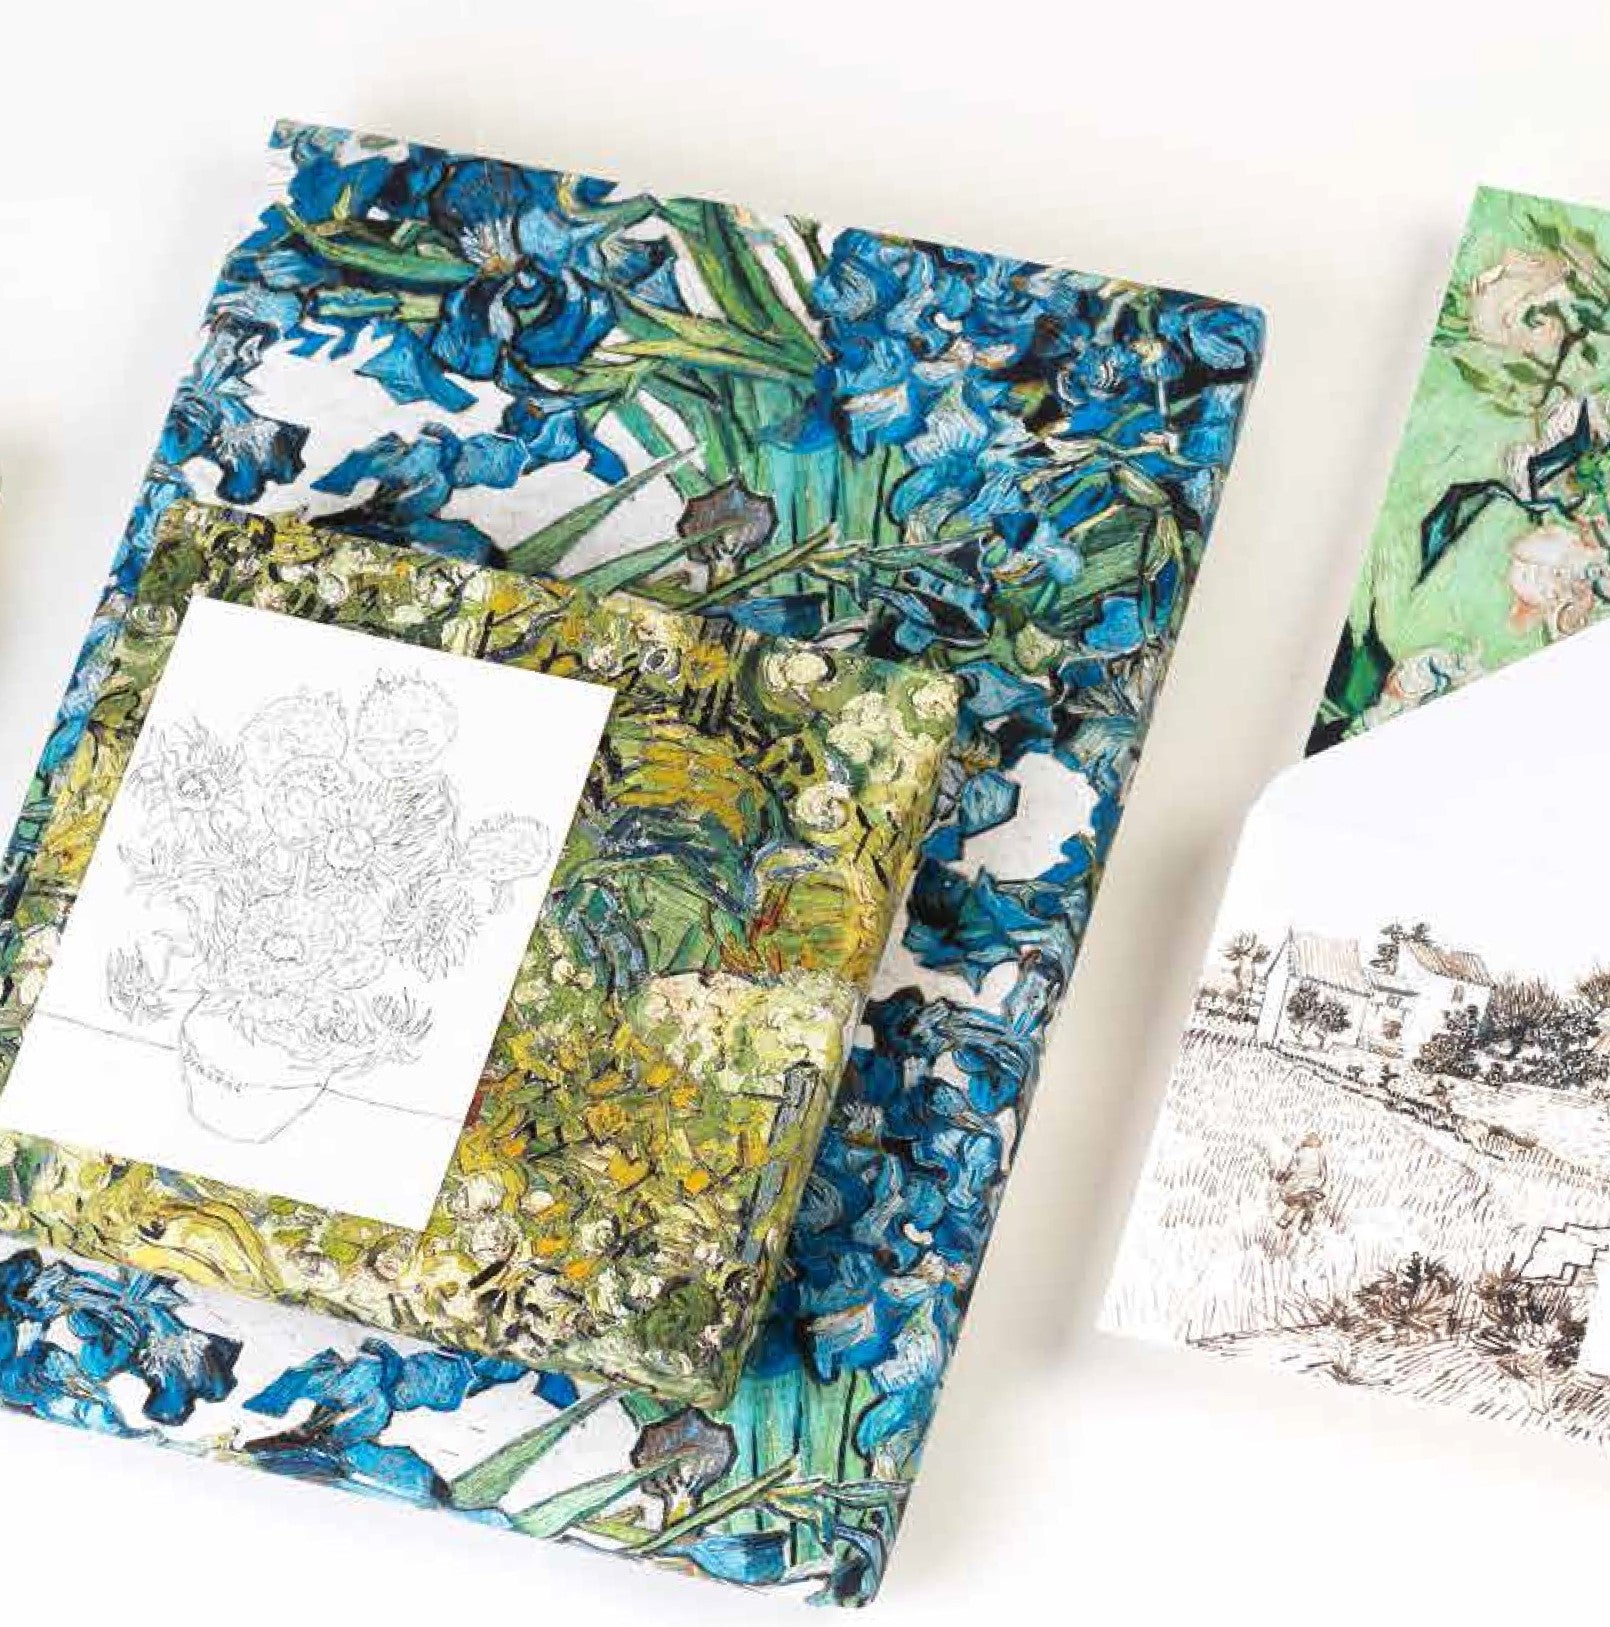 Gift & creative papers - Vincent van Gogh